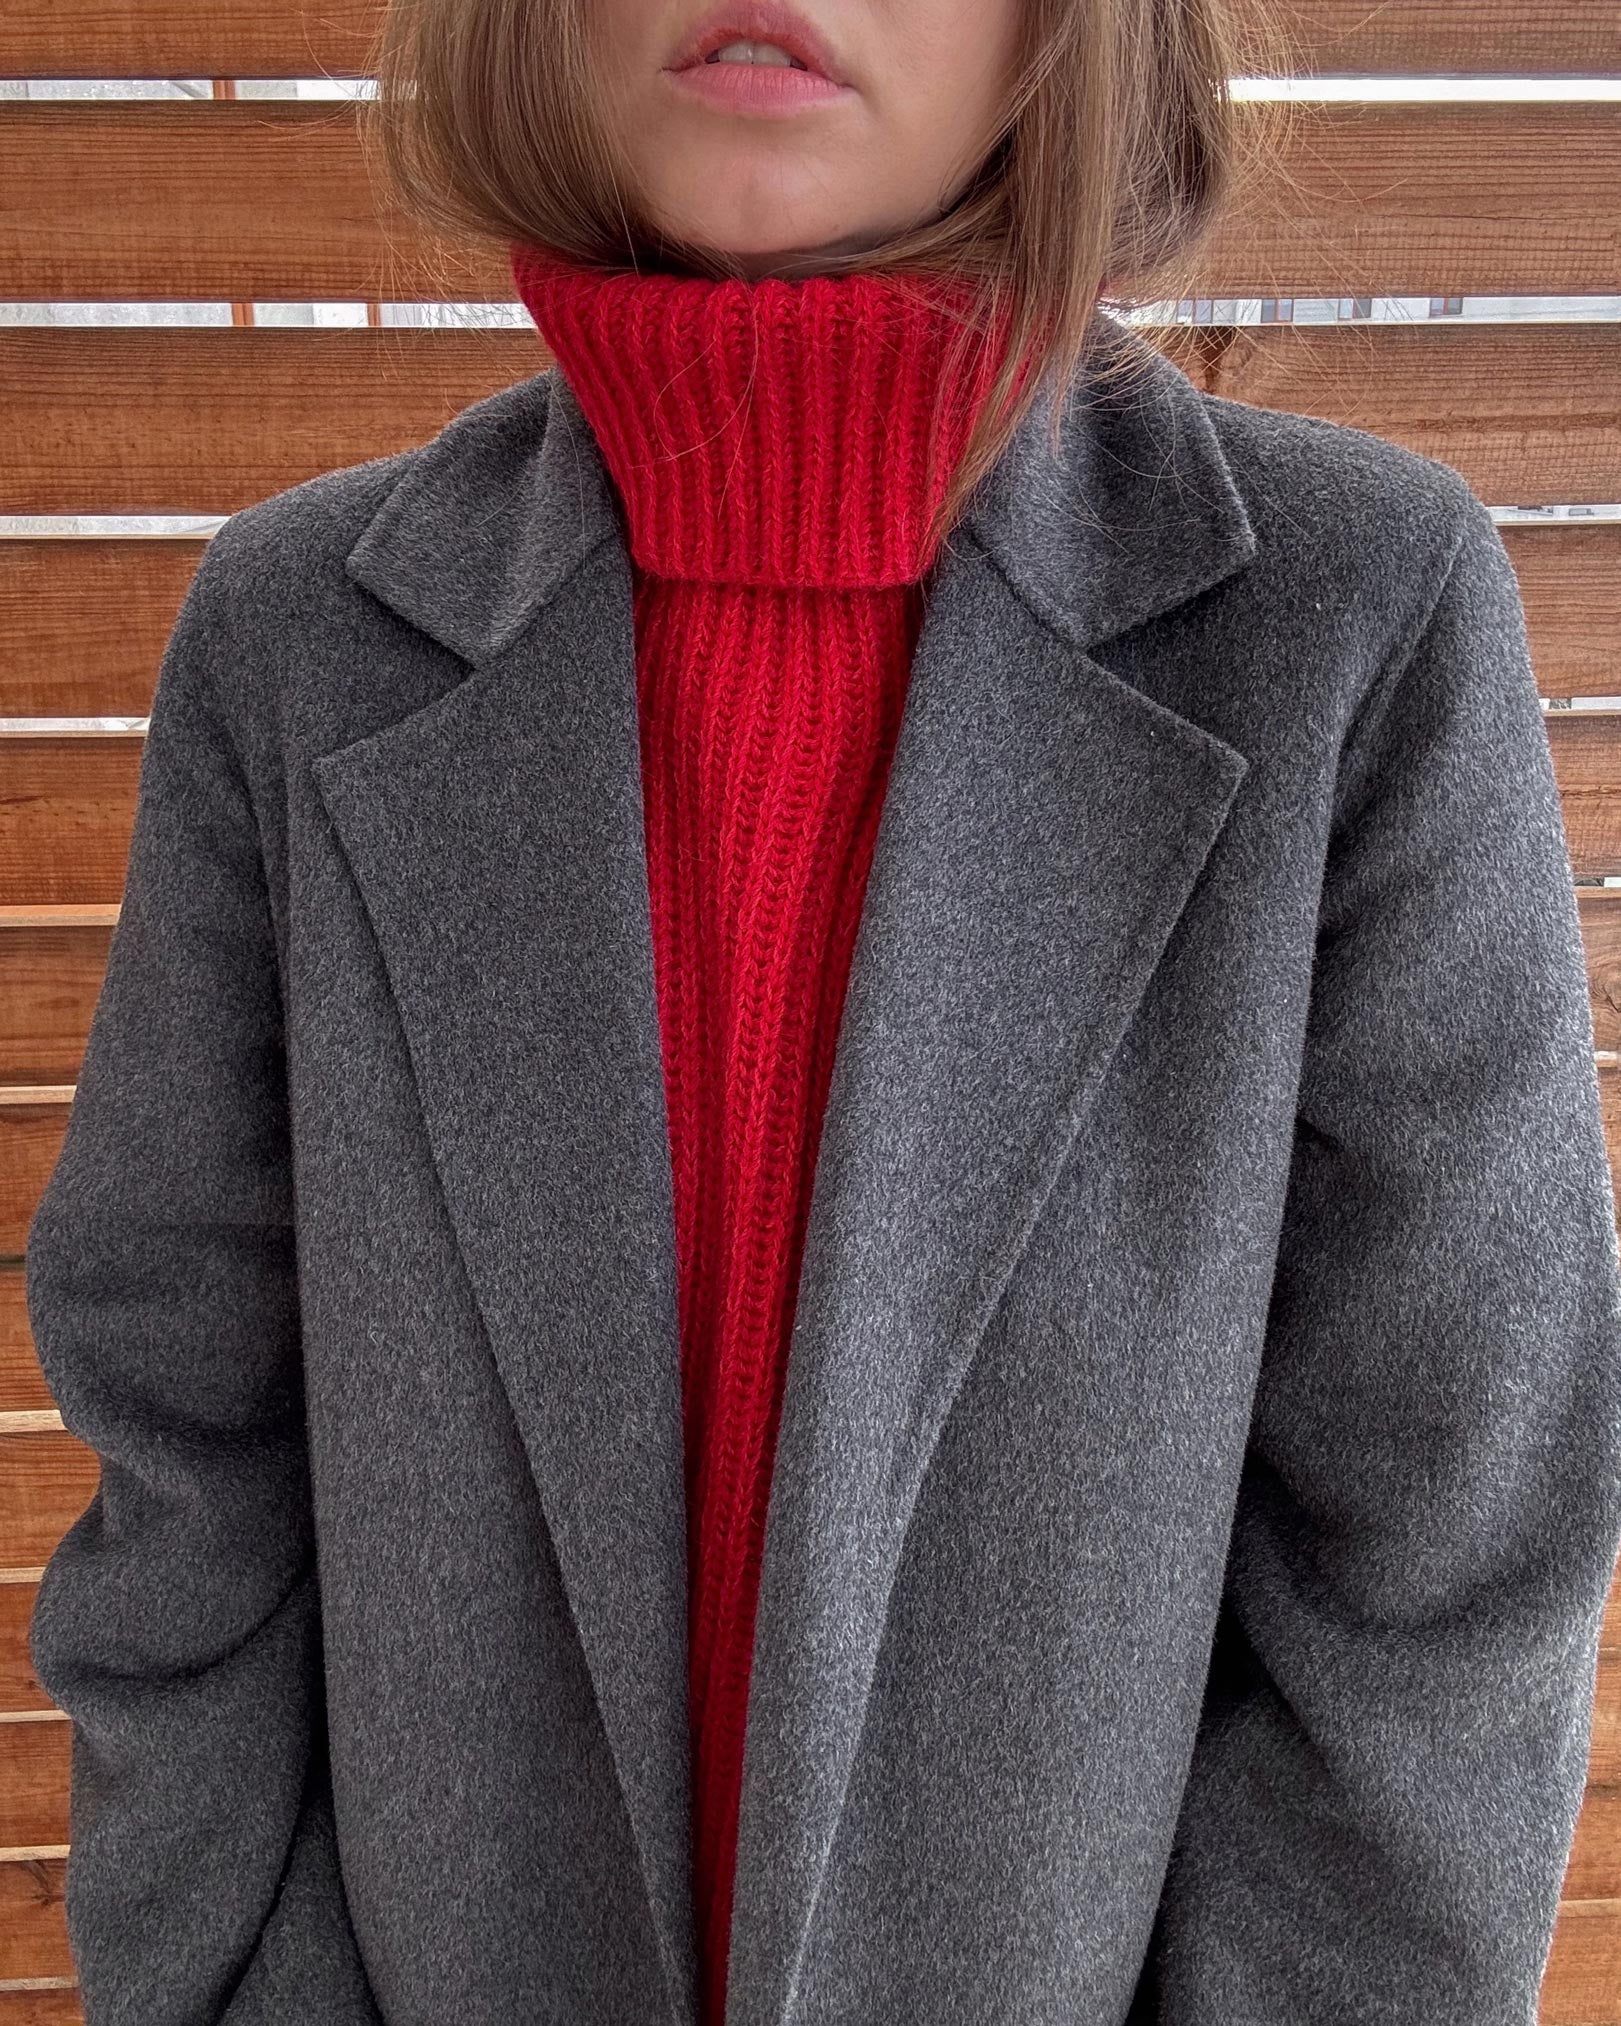 Woolen elegance in Bobbi Neck Warmer knitting pattern, ideal for winter fashion.